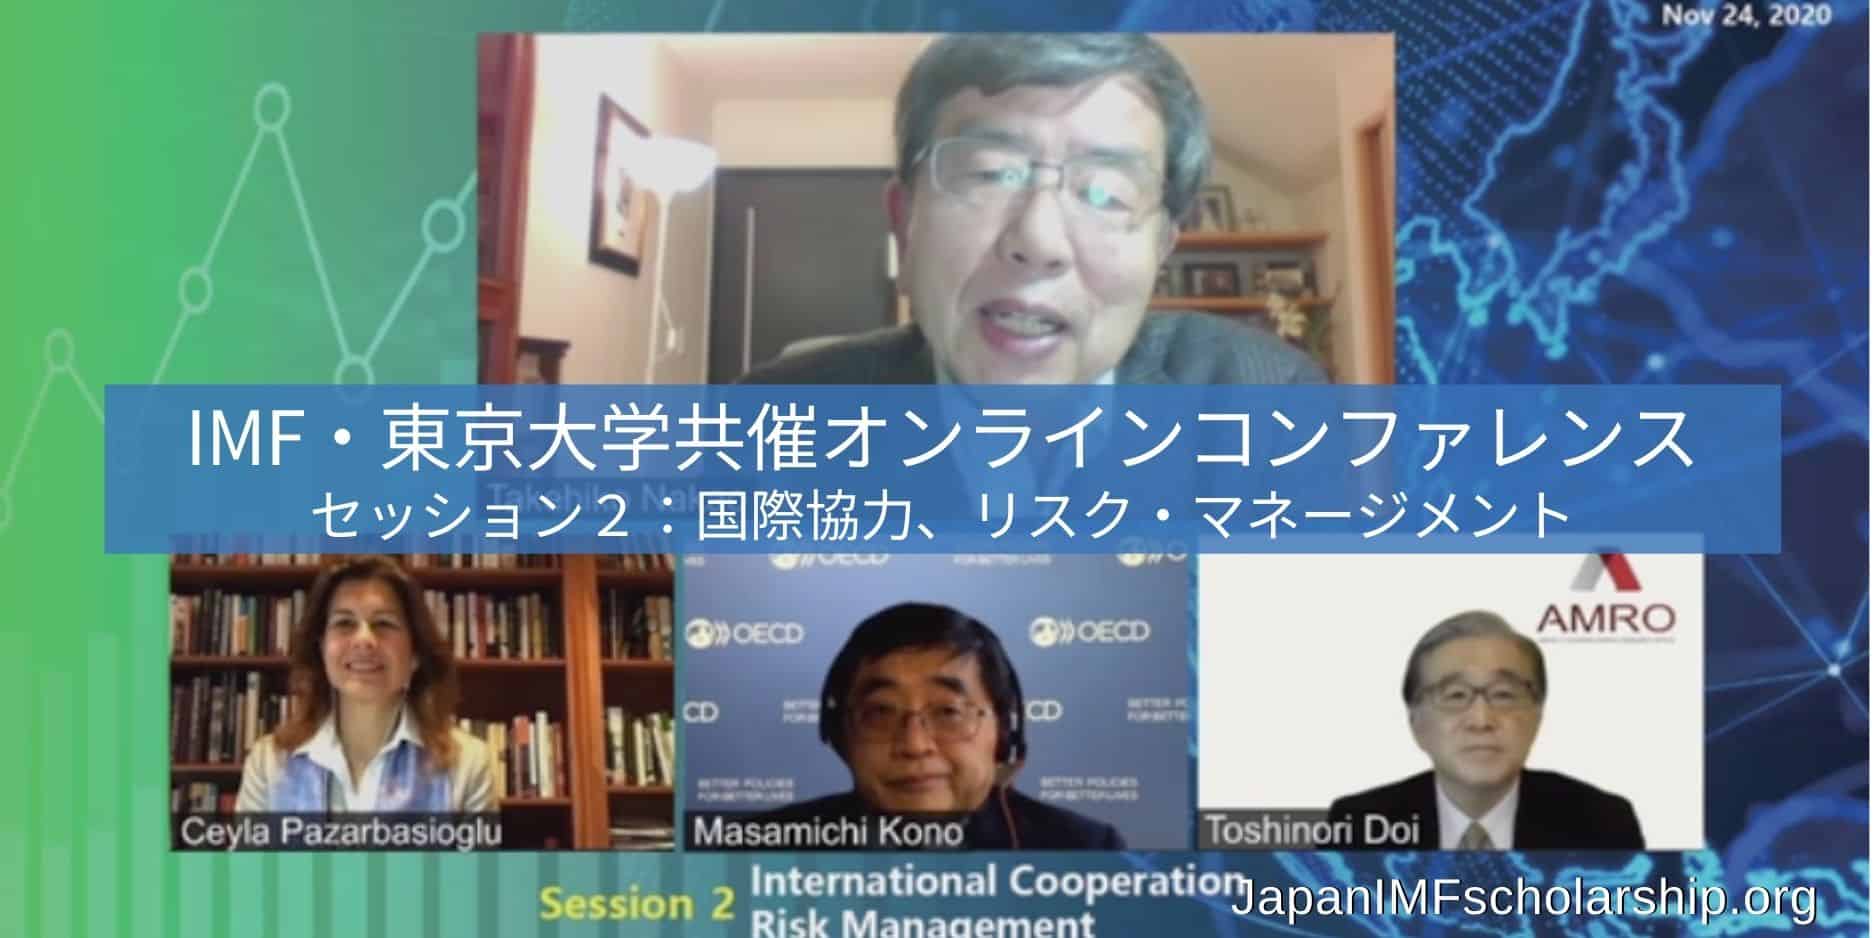 jisp web-fb imf-the university of tokyo virtual conference session 2